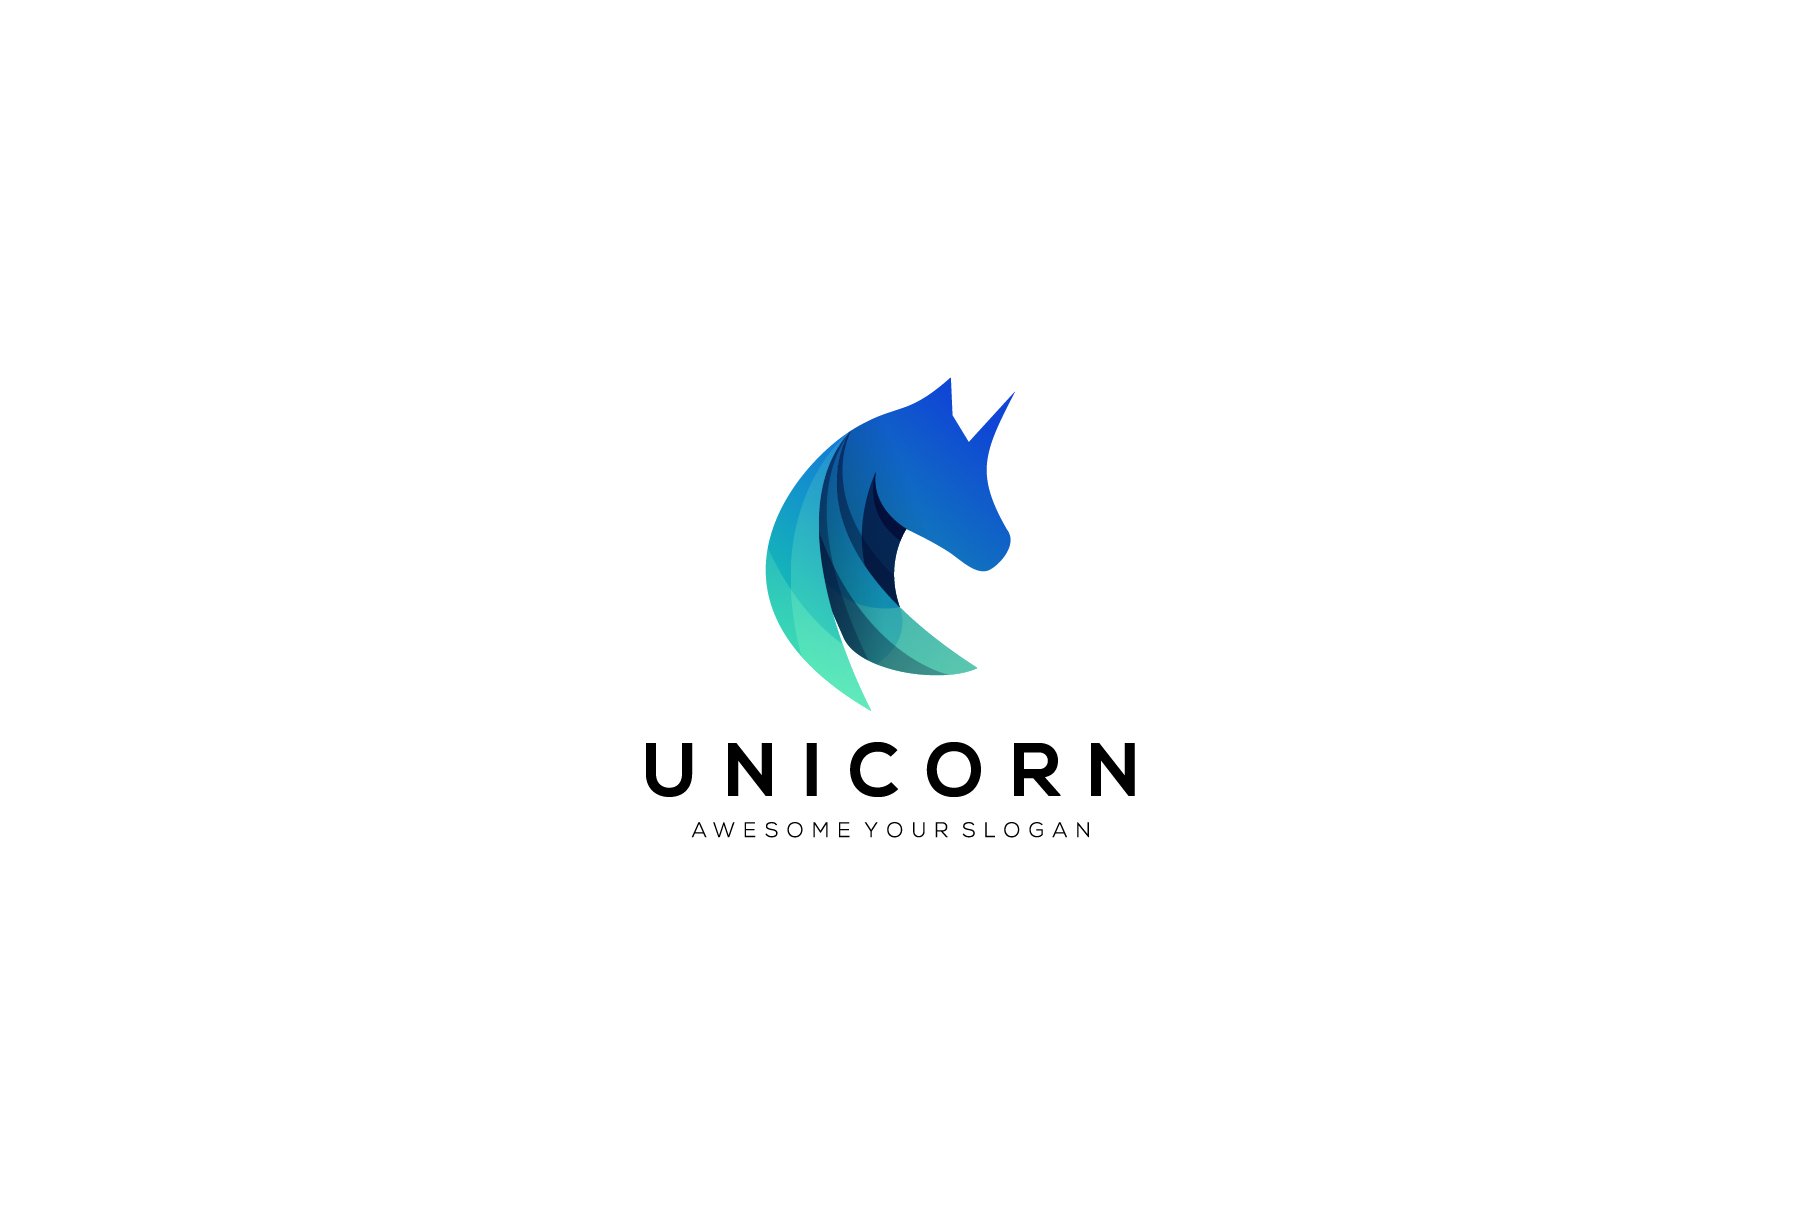 Unicorn logo design vector template cover image.